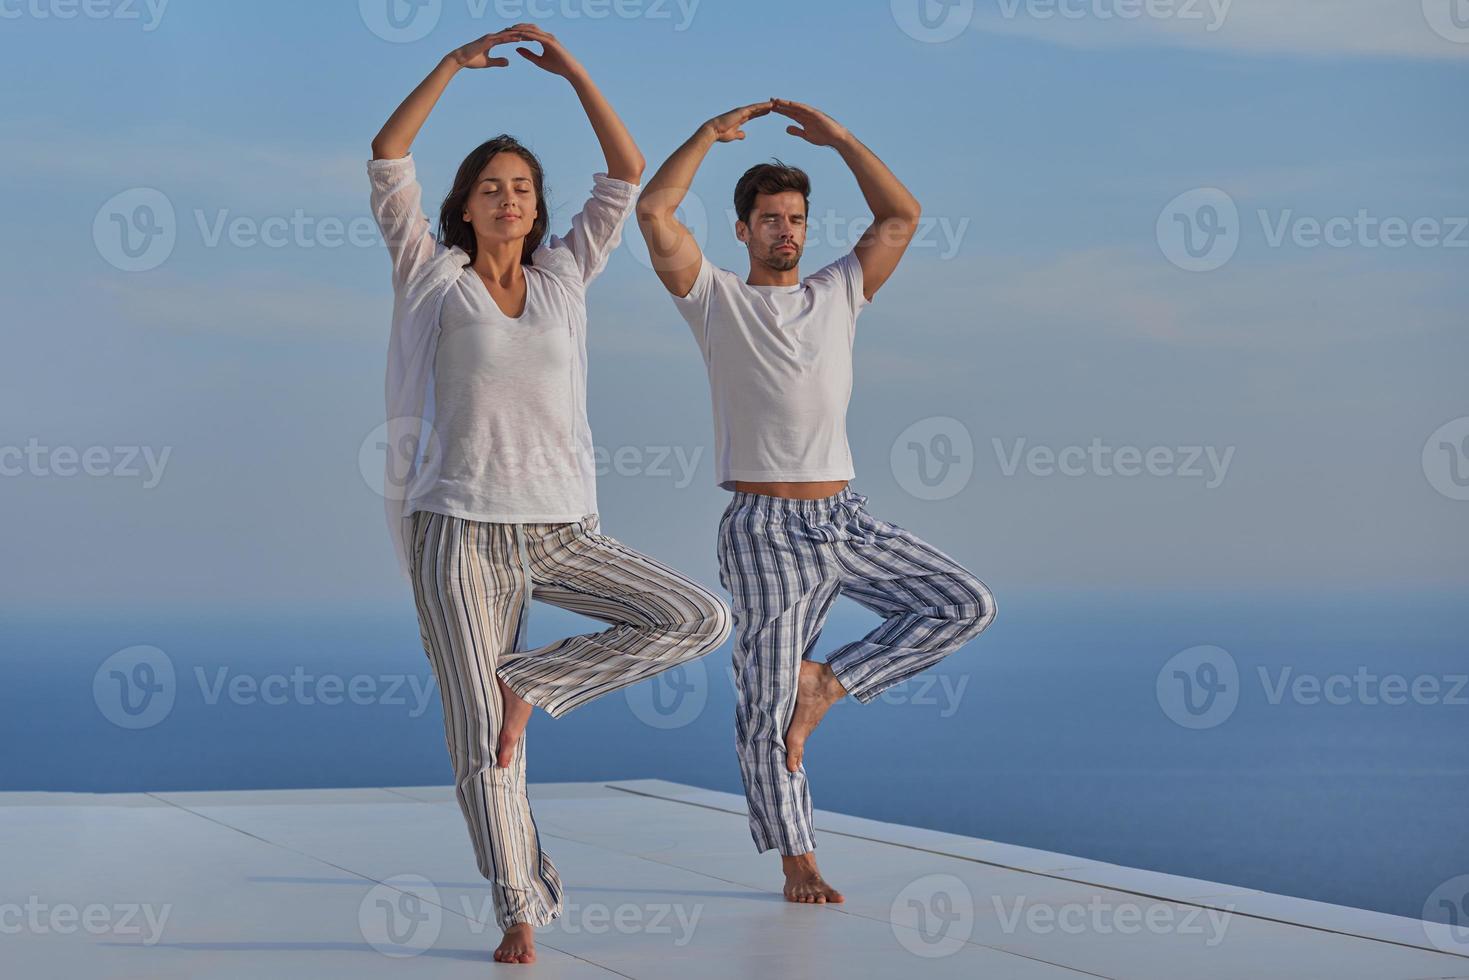 jeune couple pratiquant le yoga photo